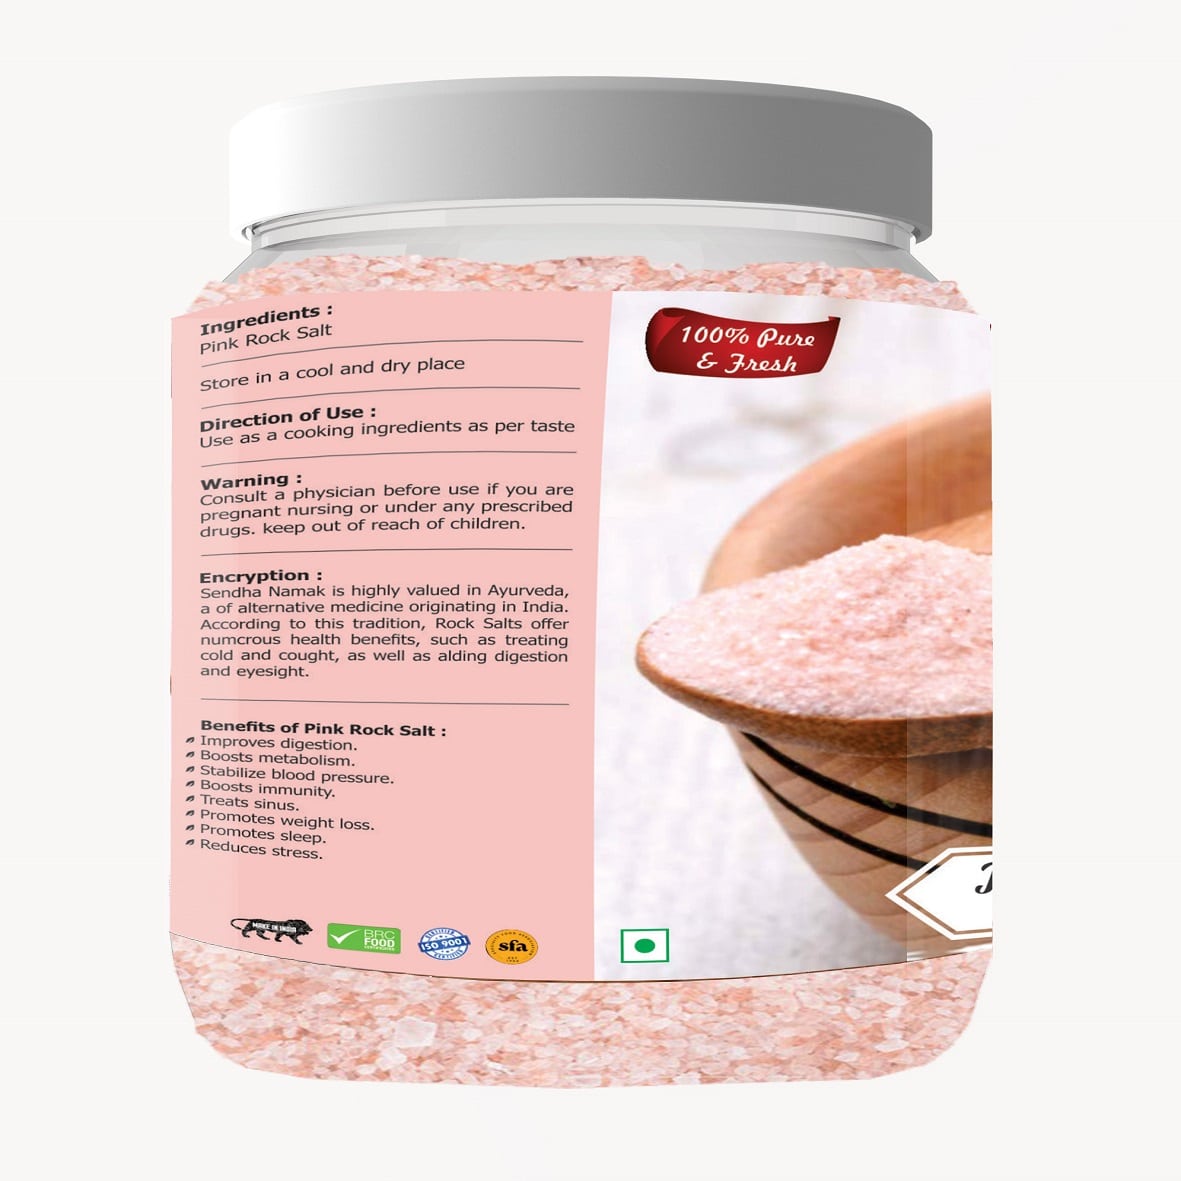 Himalyan Pink Salt 100% Premium Quality